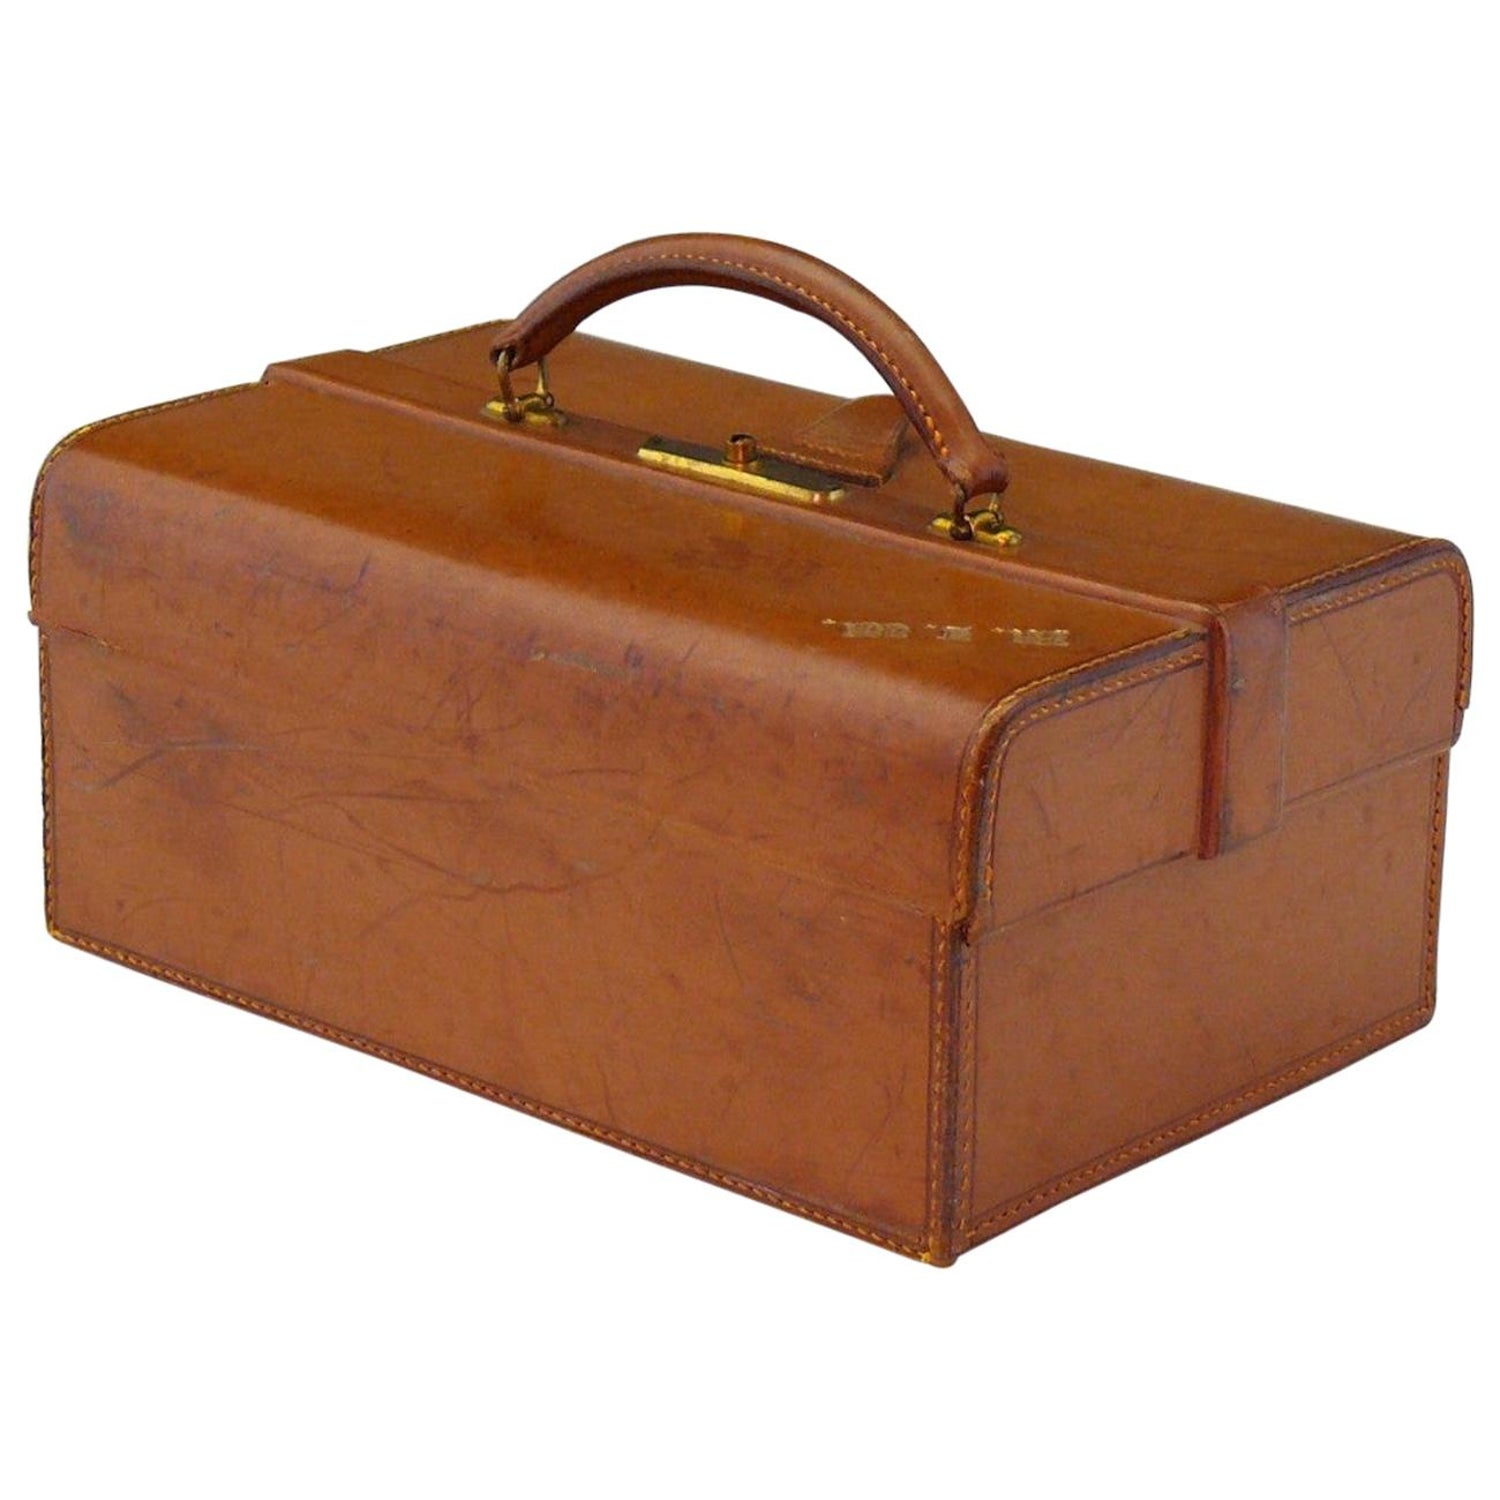 Louis Vuitton Empty Gift Box Orange Authentic Wallet BOX Side:21cm/8.27in